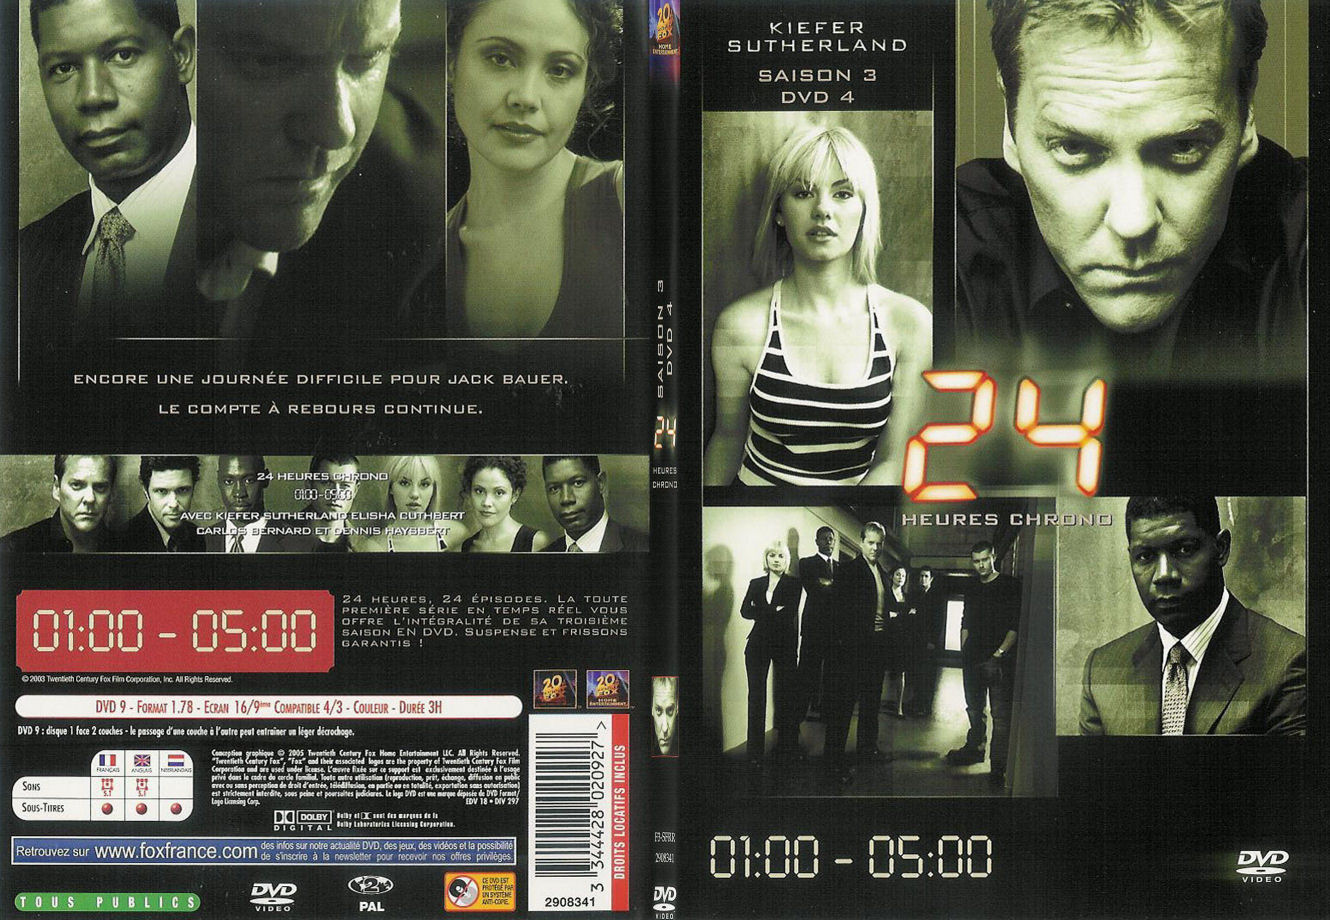 Jaquette DVD 24 heures chrono Saison 3 dvd 4 - SLIM